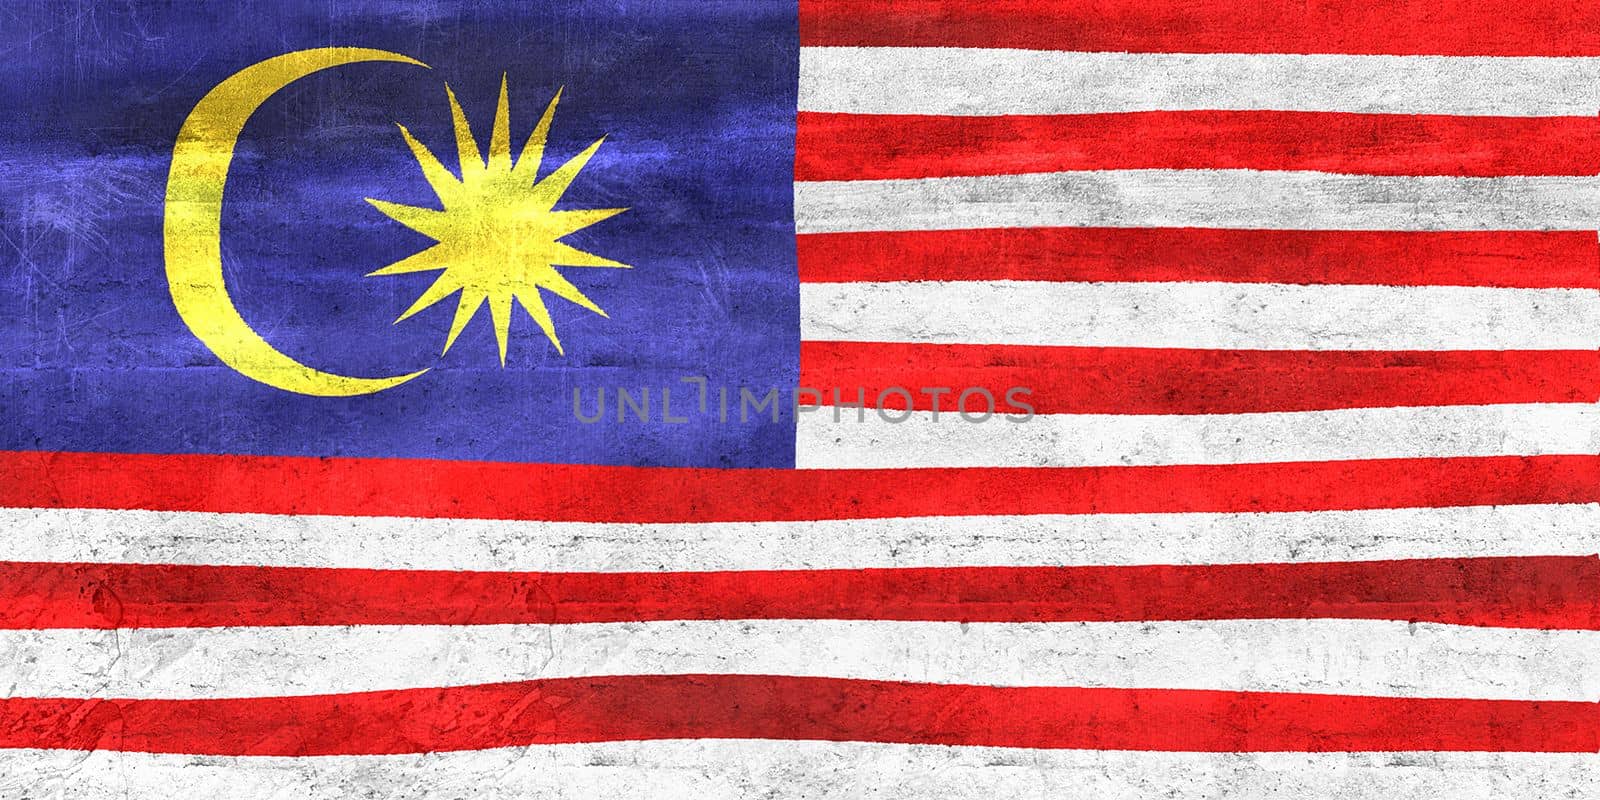 Malaysia flag - realistic waving fabric flag